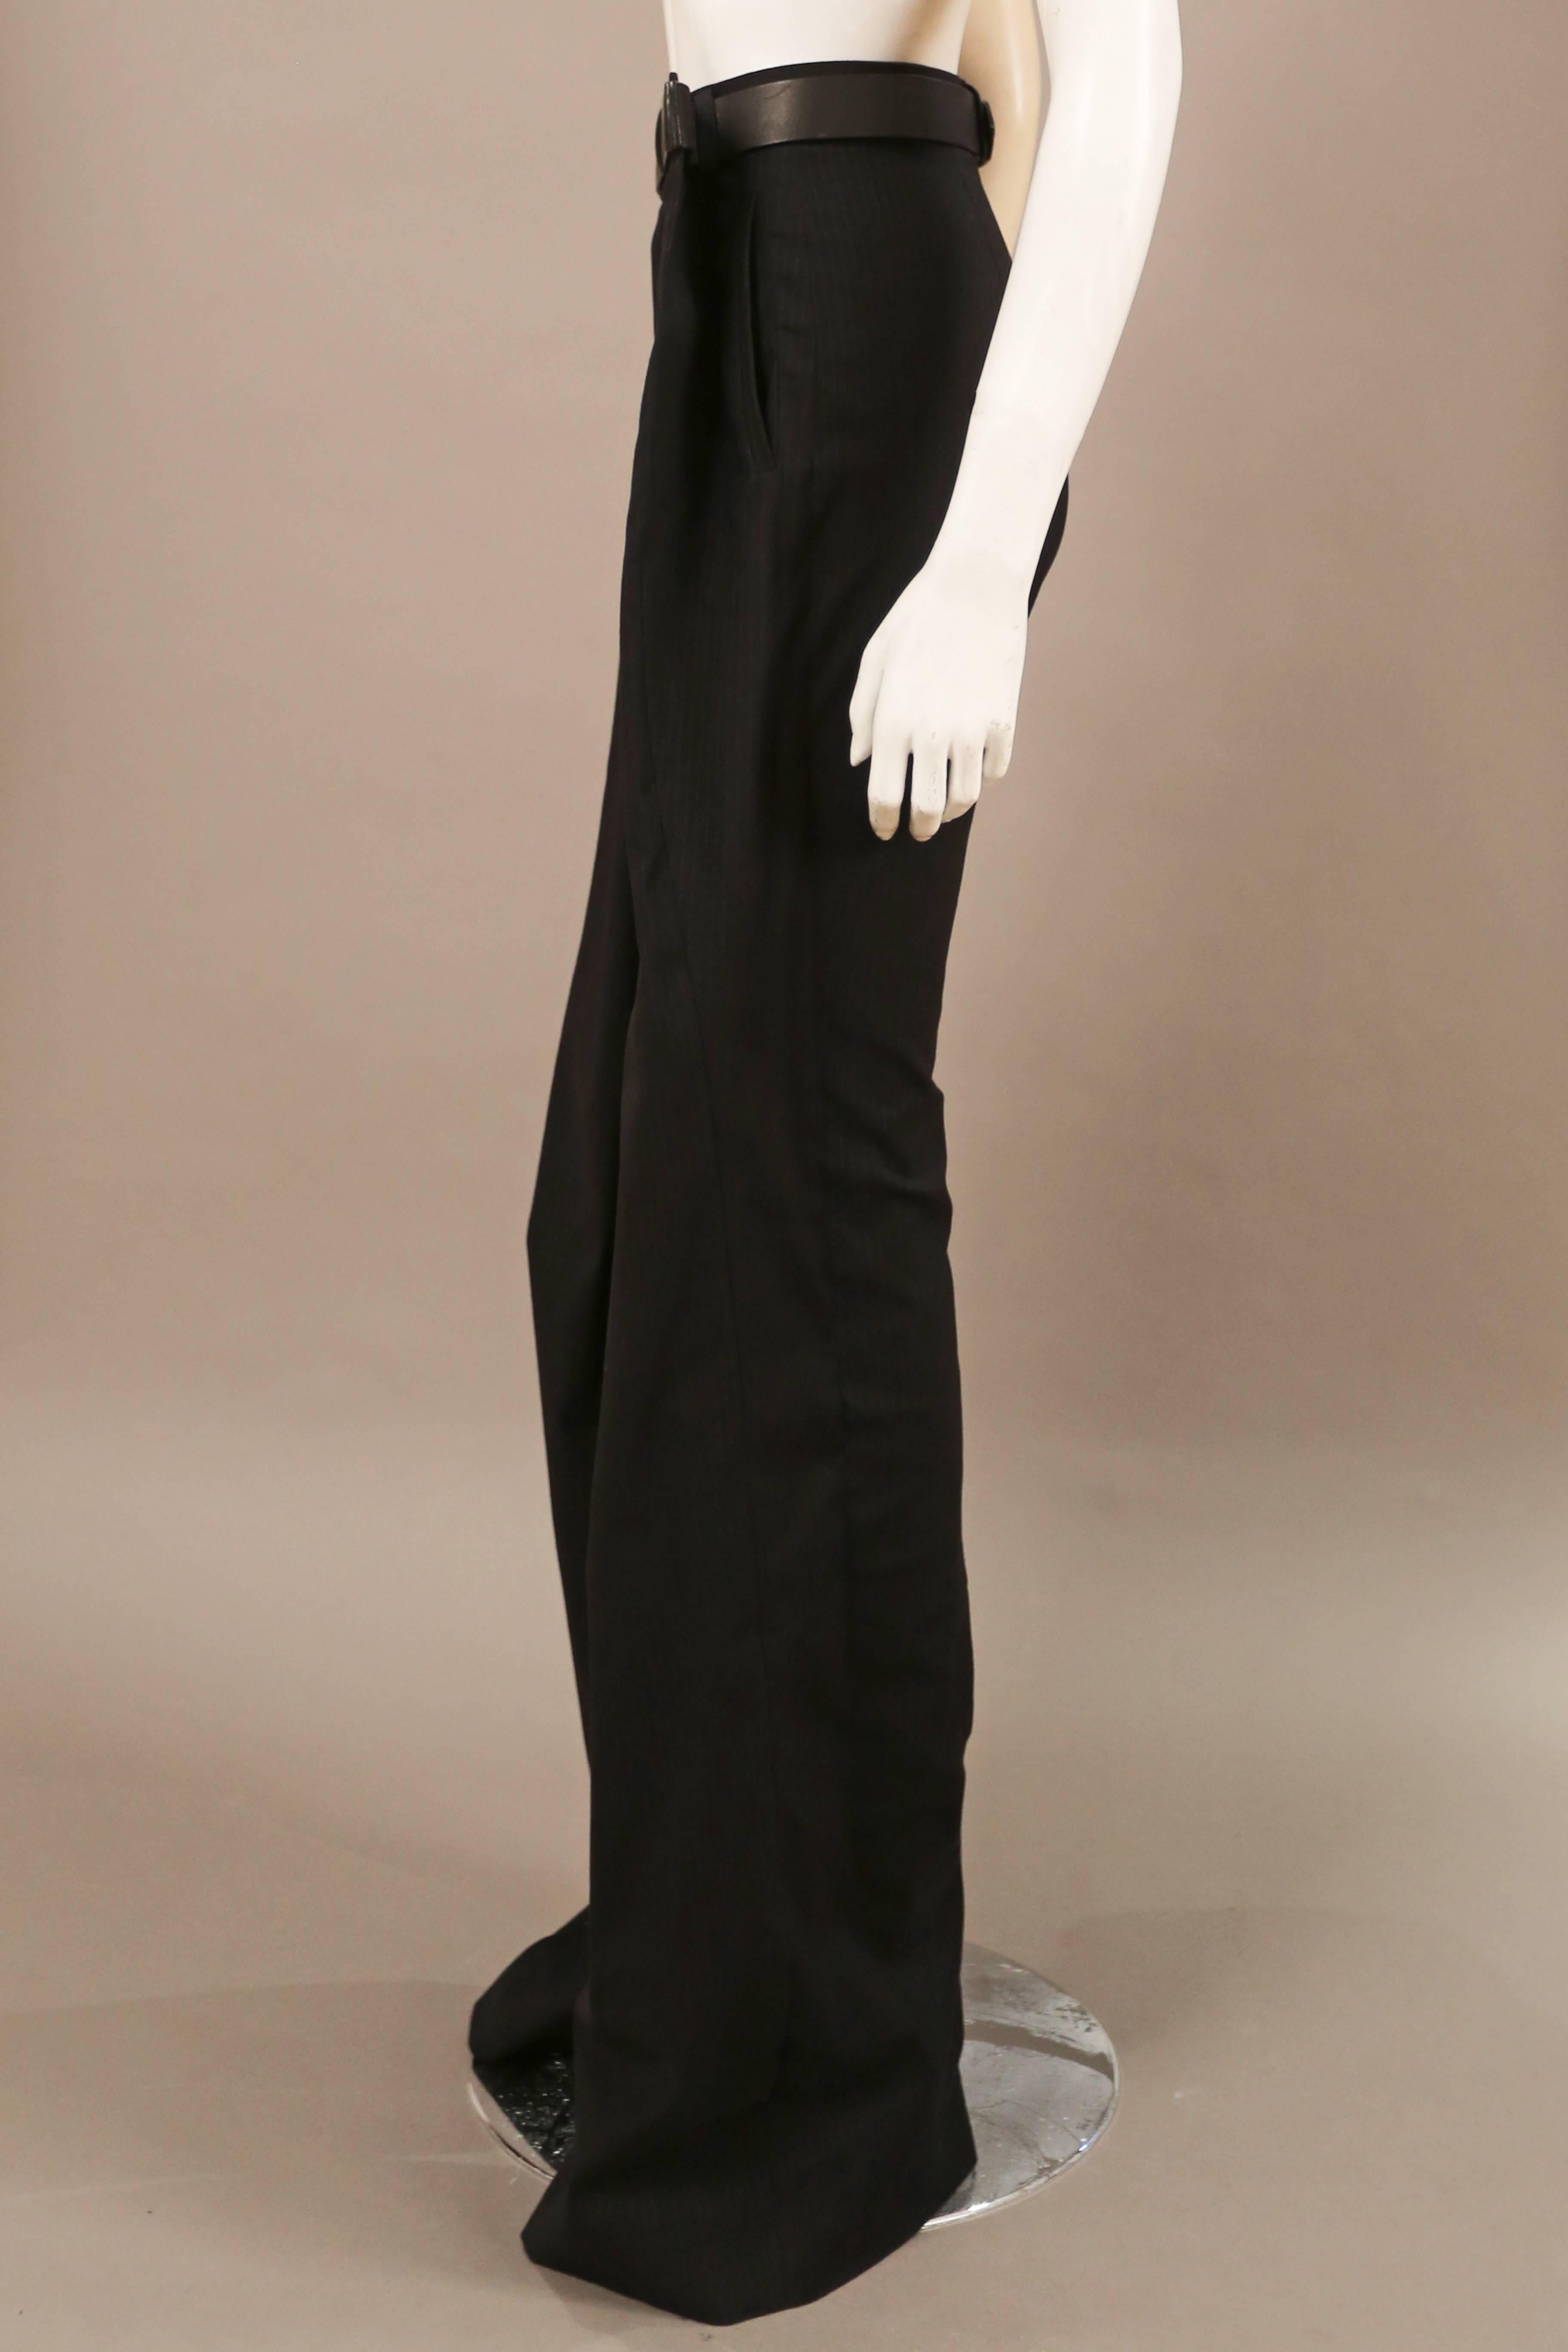 Black Maison Martin Margiela runway black pinstripe extended wide leg pants, c. 2011